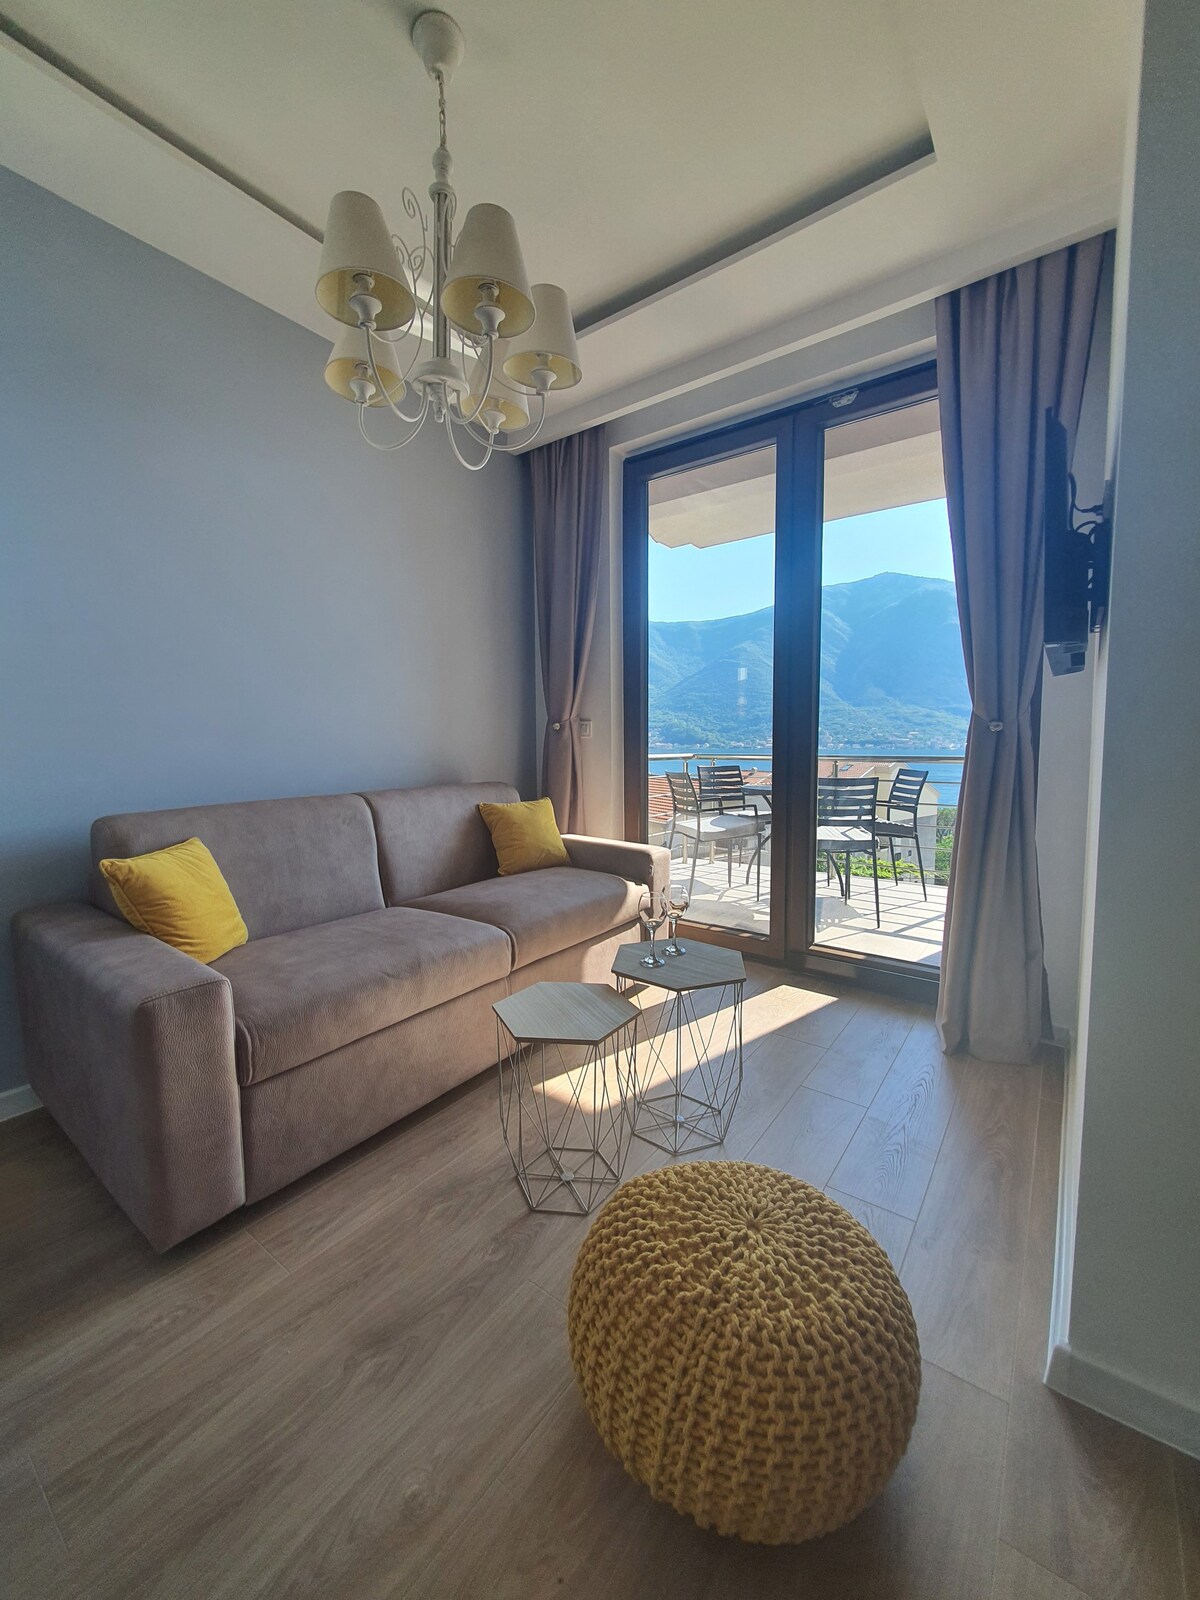 Premium 1-BR apartment with stunning Boka Bay view